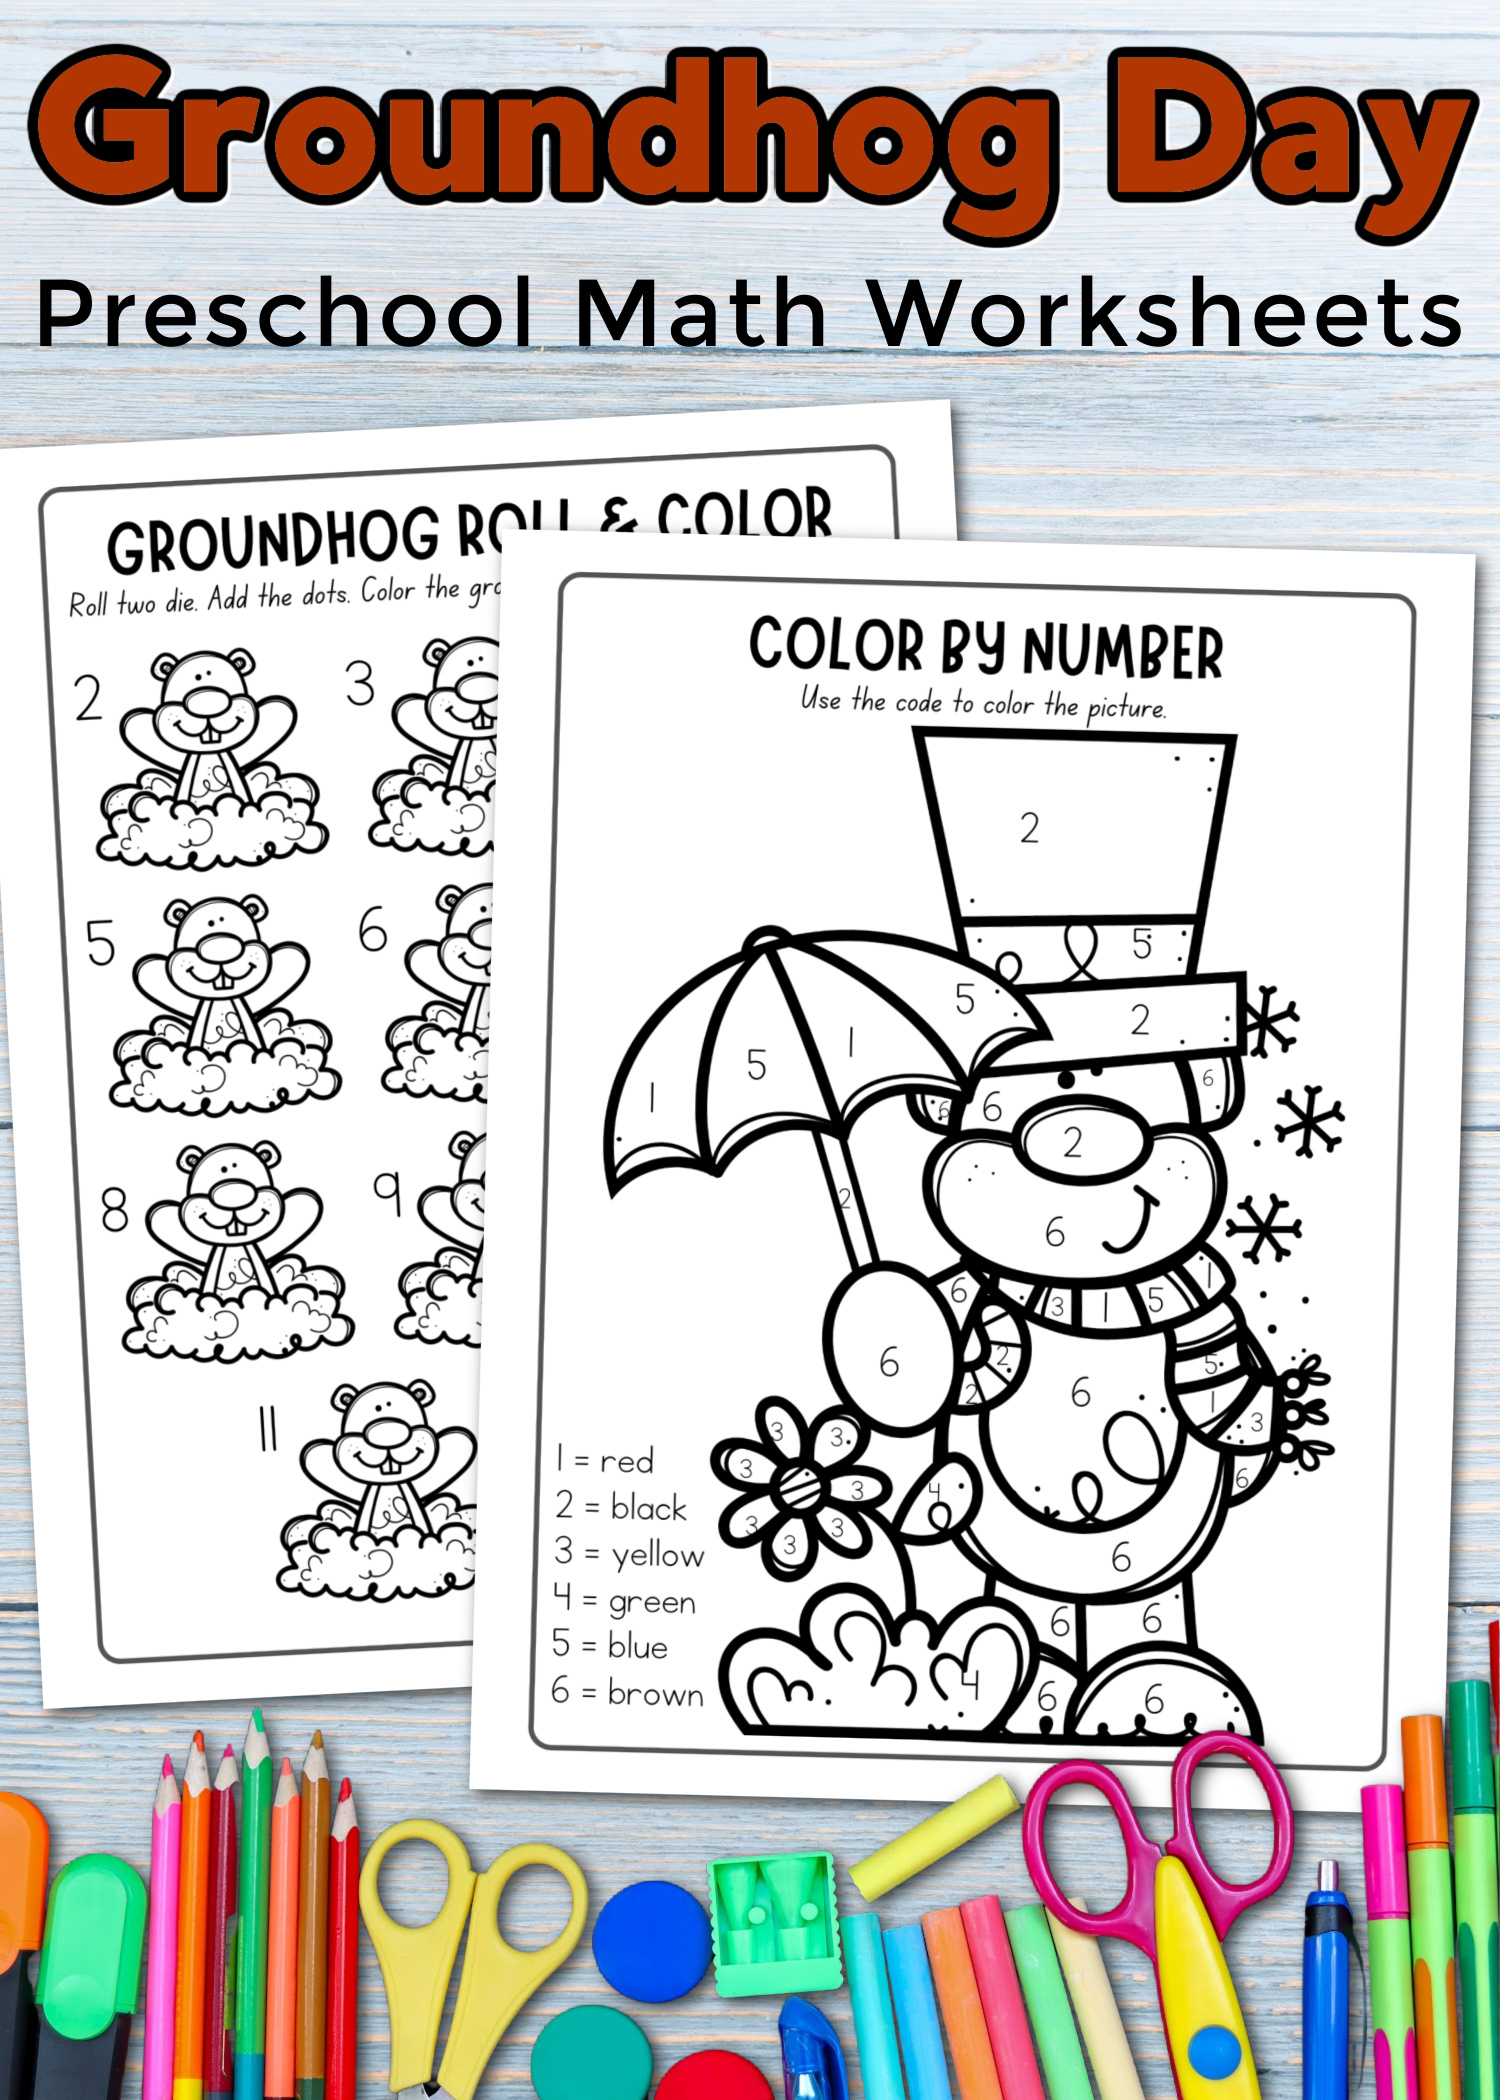 groundhog-day-math-activities-for-preschoolers Groundhog Day Math